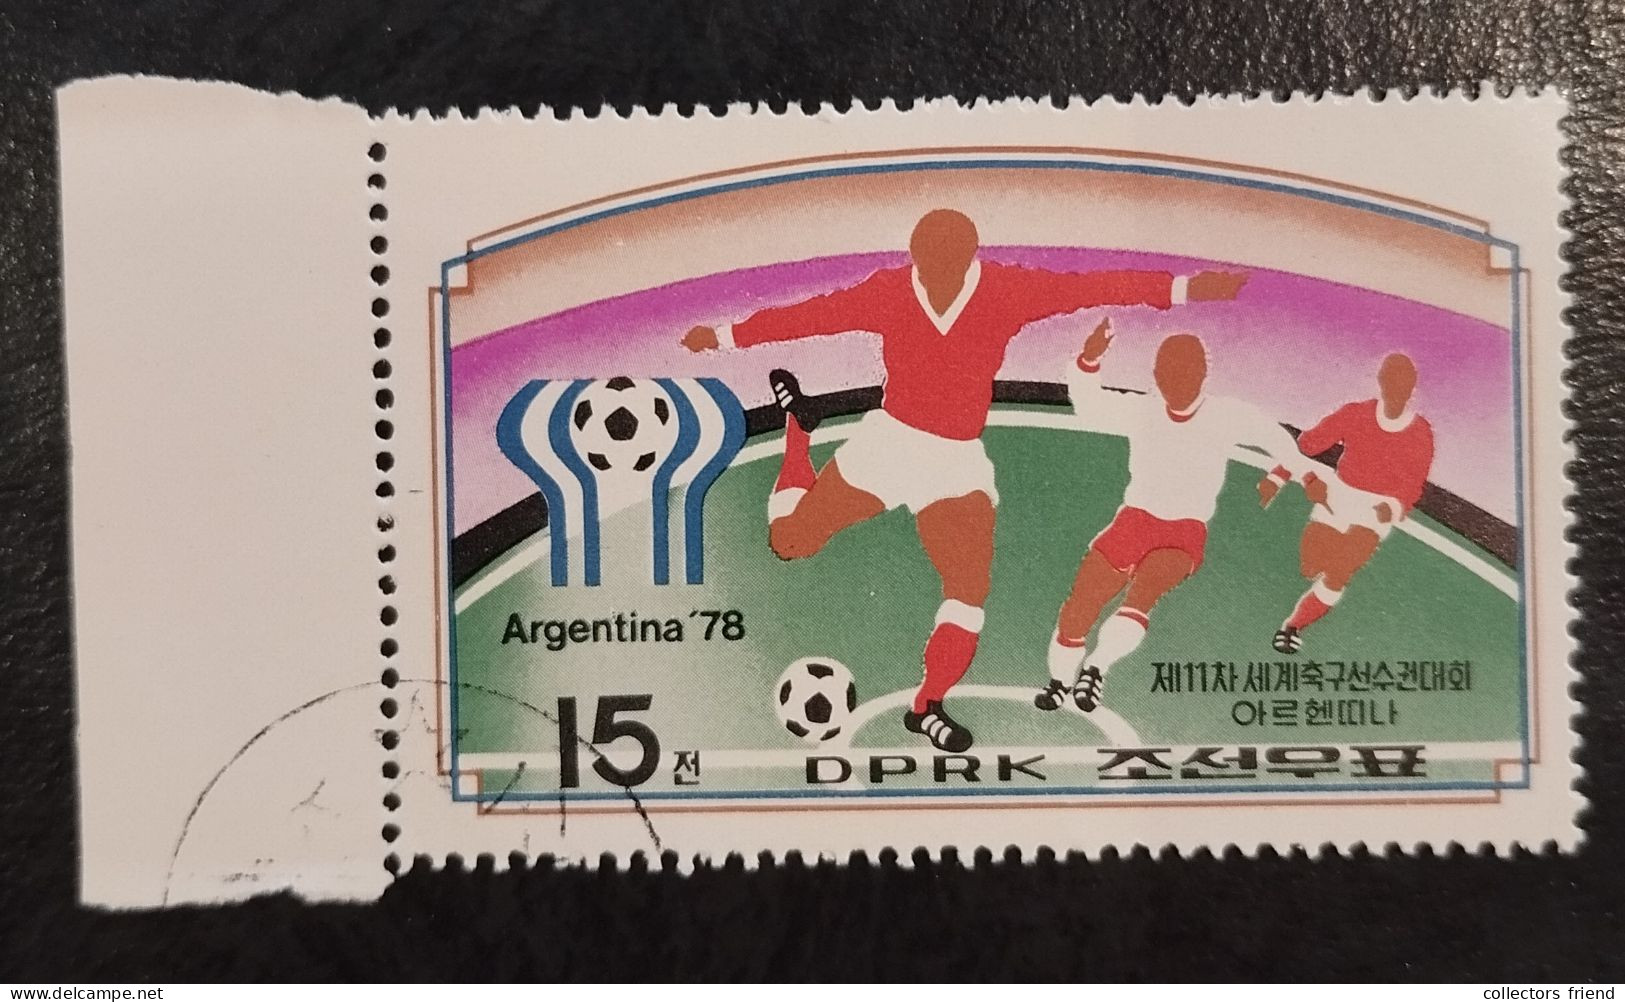 COREE DU NORD, NORTH KOREA, Nordkorea - 1978 - FOOTBALL FUSSBALL SOCCER - Used - 1978 – Argentine